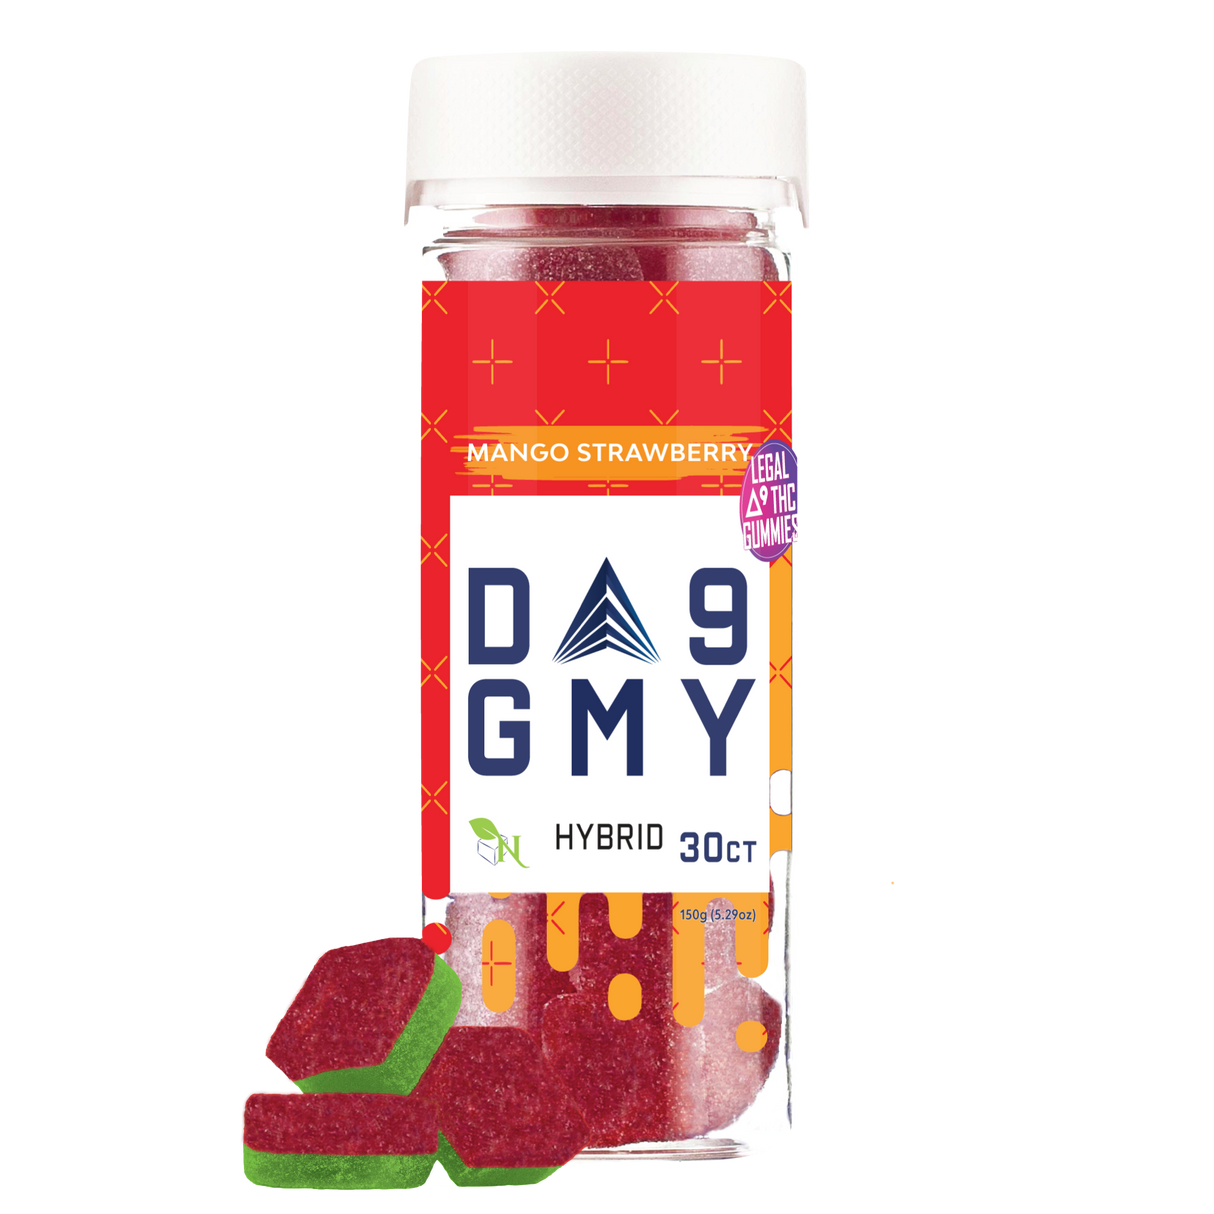 A Gift From Nature Delta-9 Hybrid Gummy Jar: Mango Strawberry